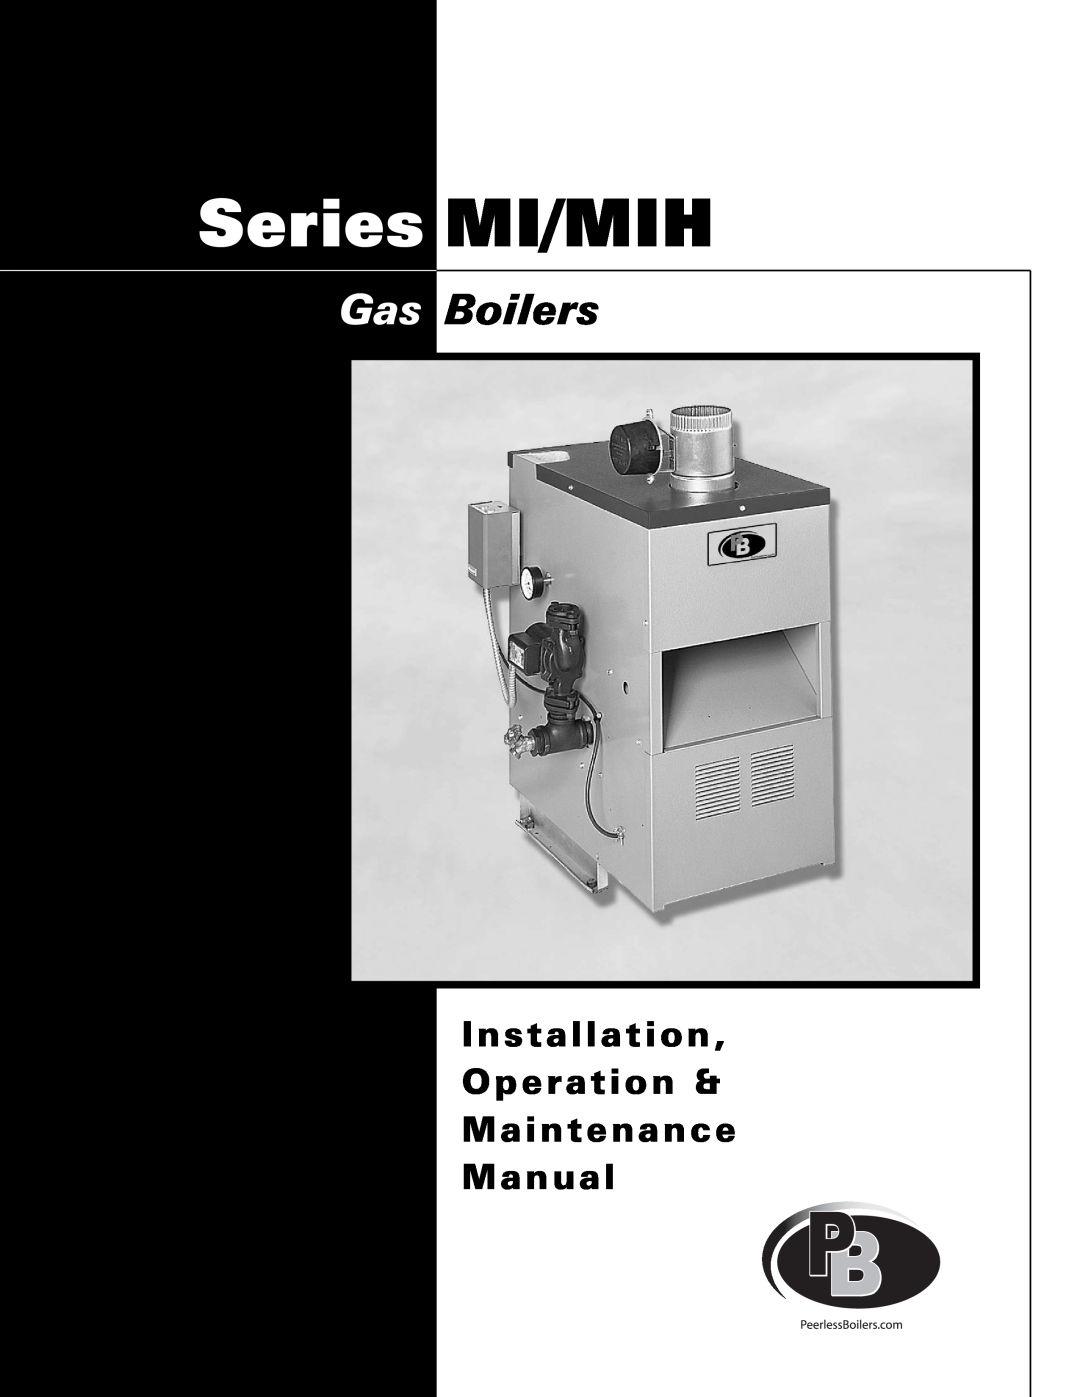 PB Heat MI/MIH series manual Gas Boilers, Installation Operation & Maintenance Manual, Series MI/MIH 